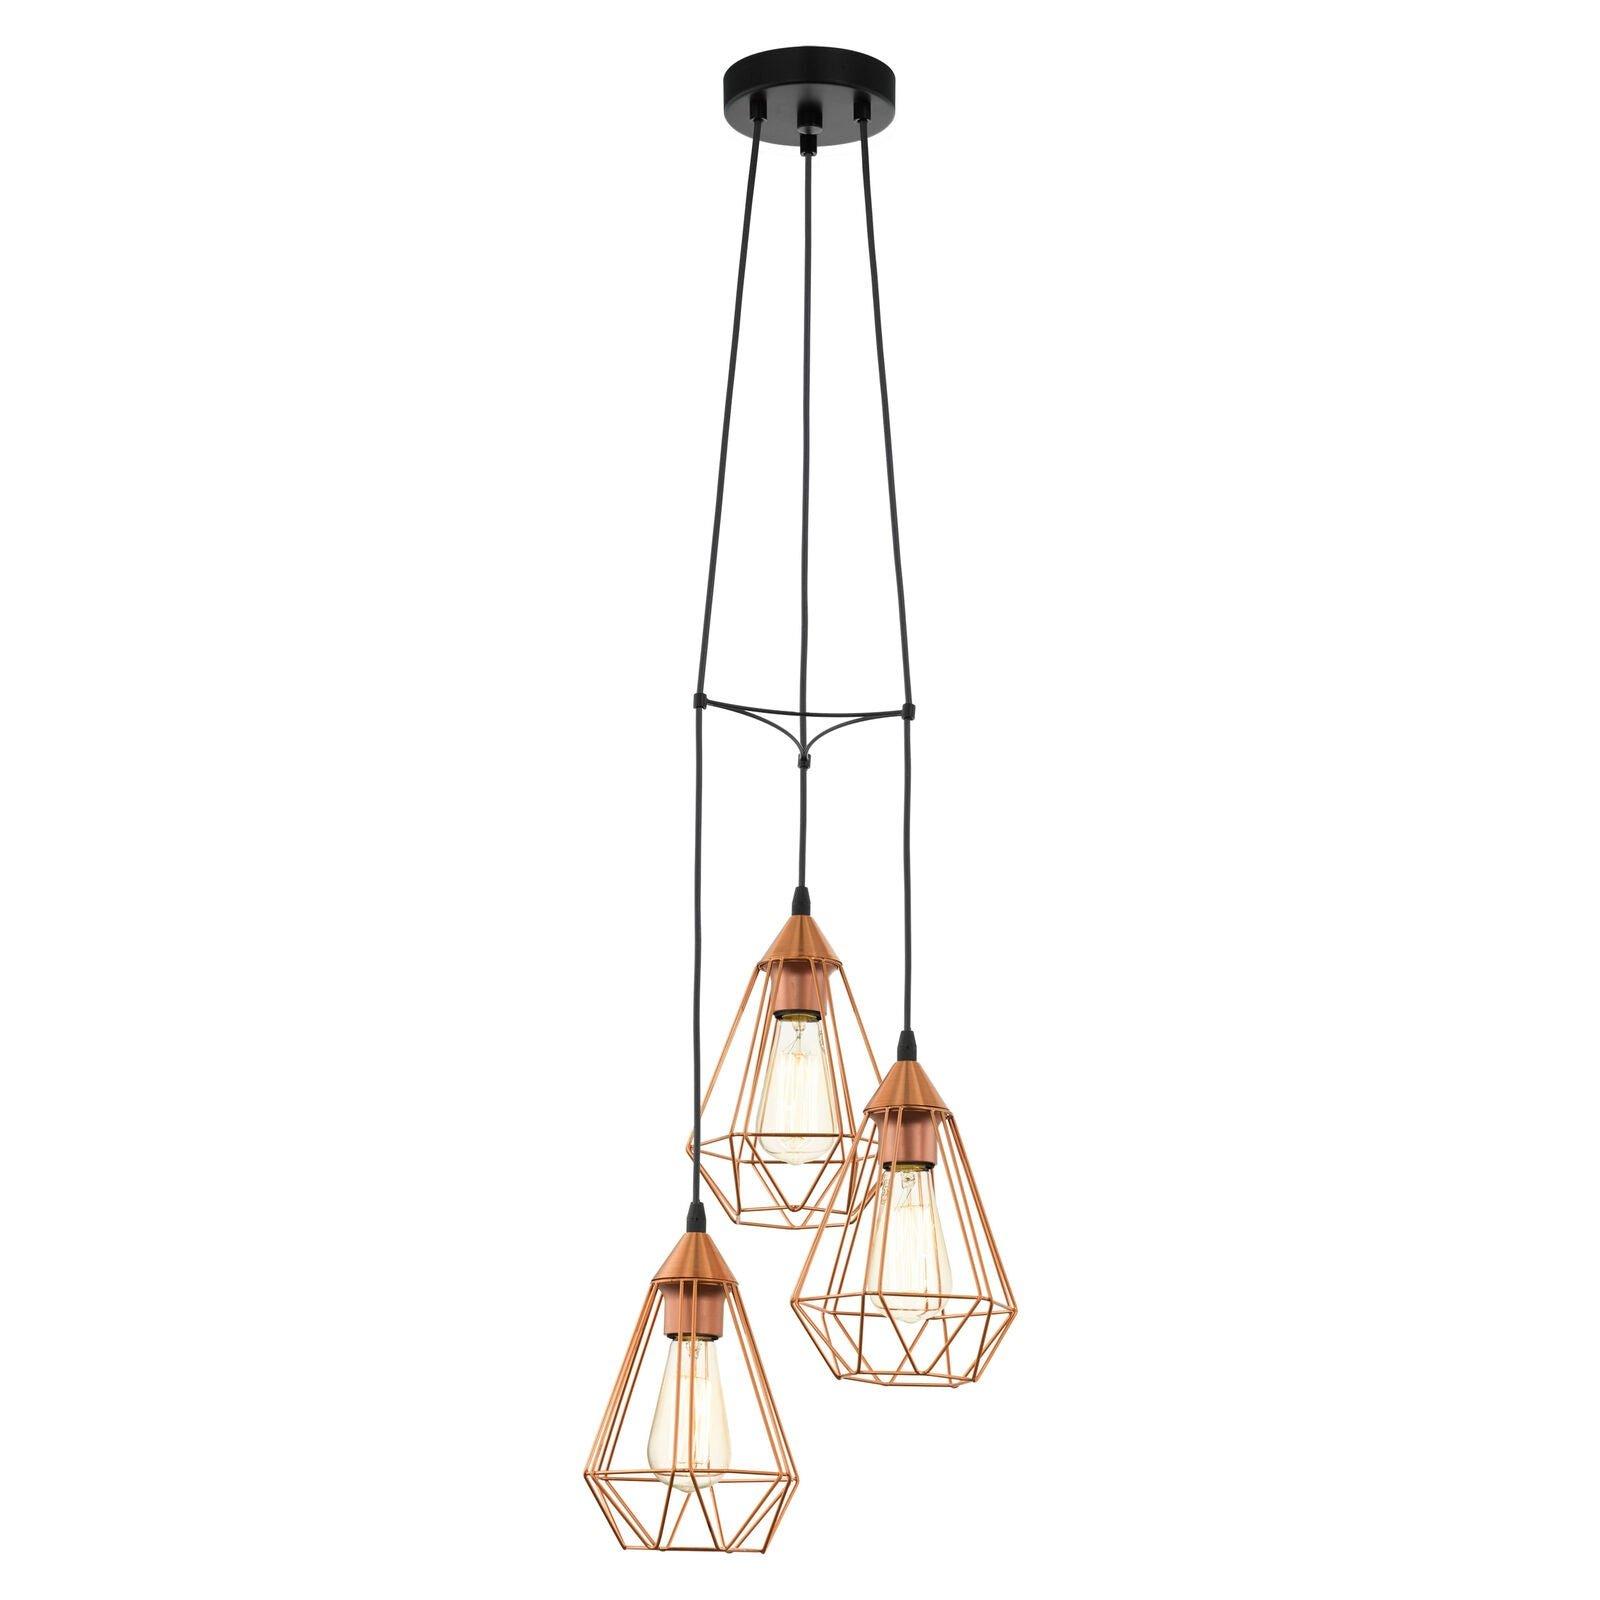 Hanging Ceiling Pendant Light Copper Wire Cage 3x E27 Geometric Multi Lamp